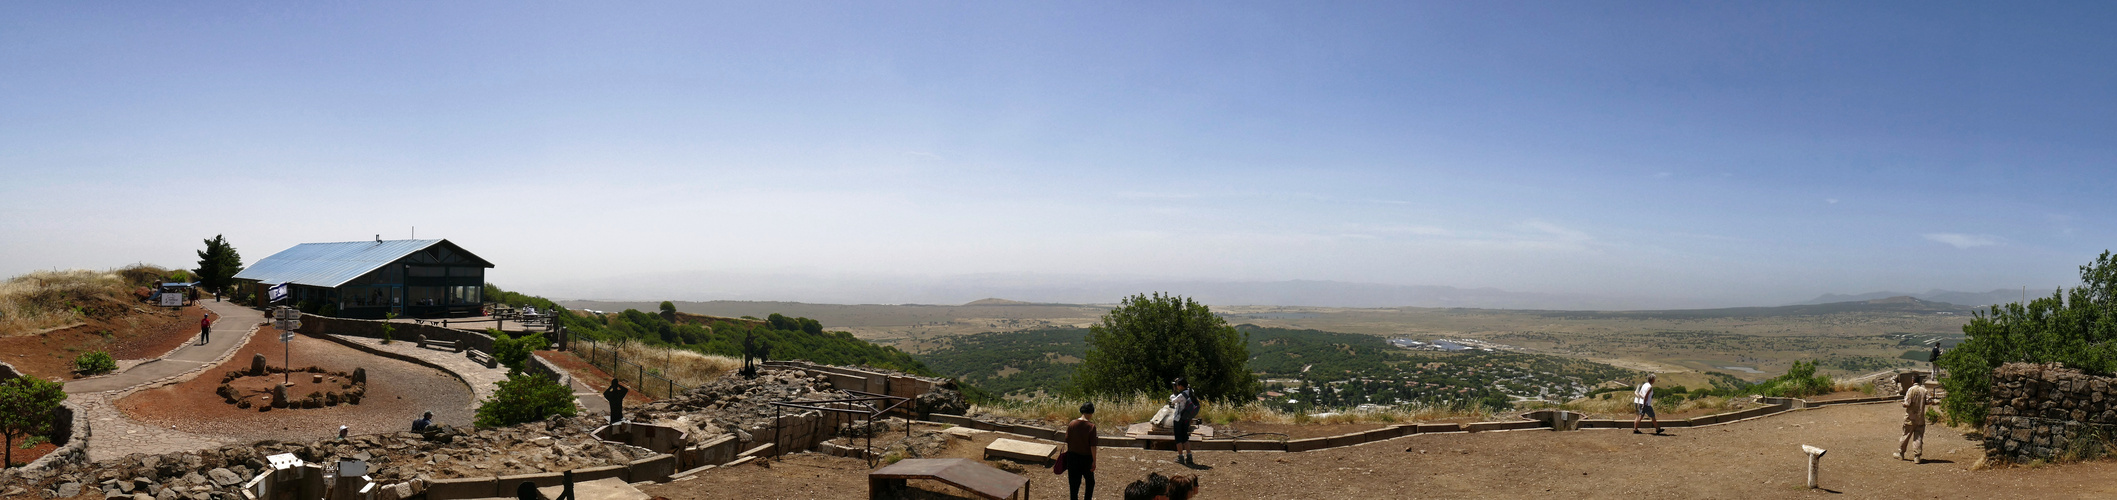 Panorama Israel - Golanhöhen